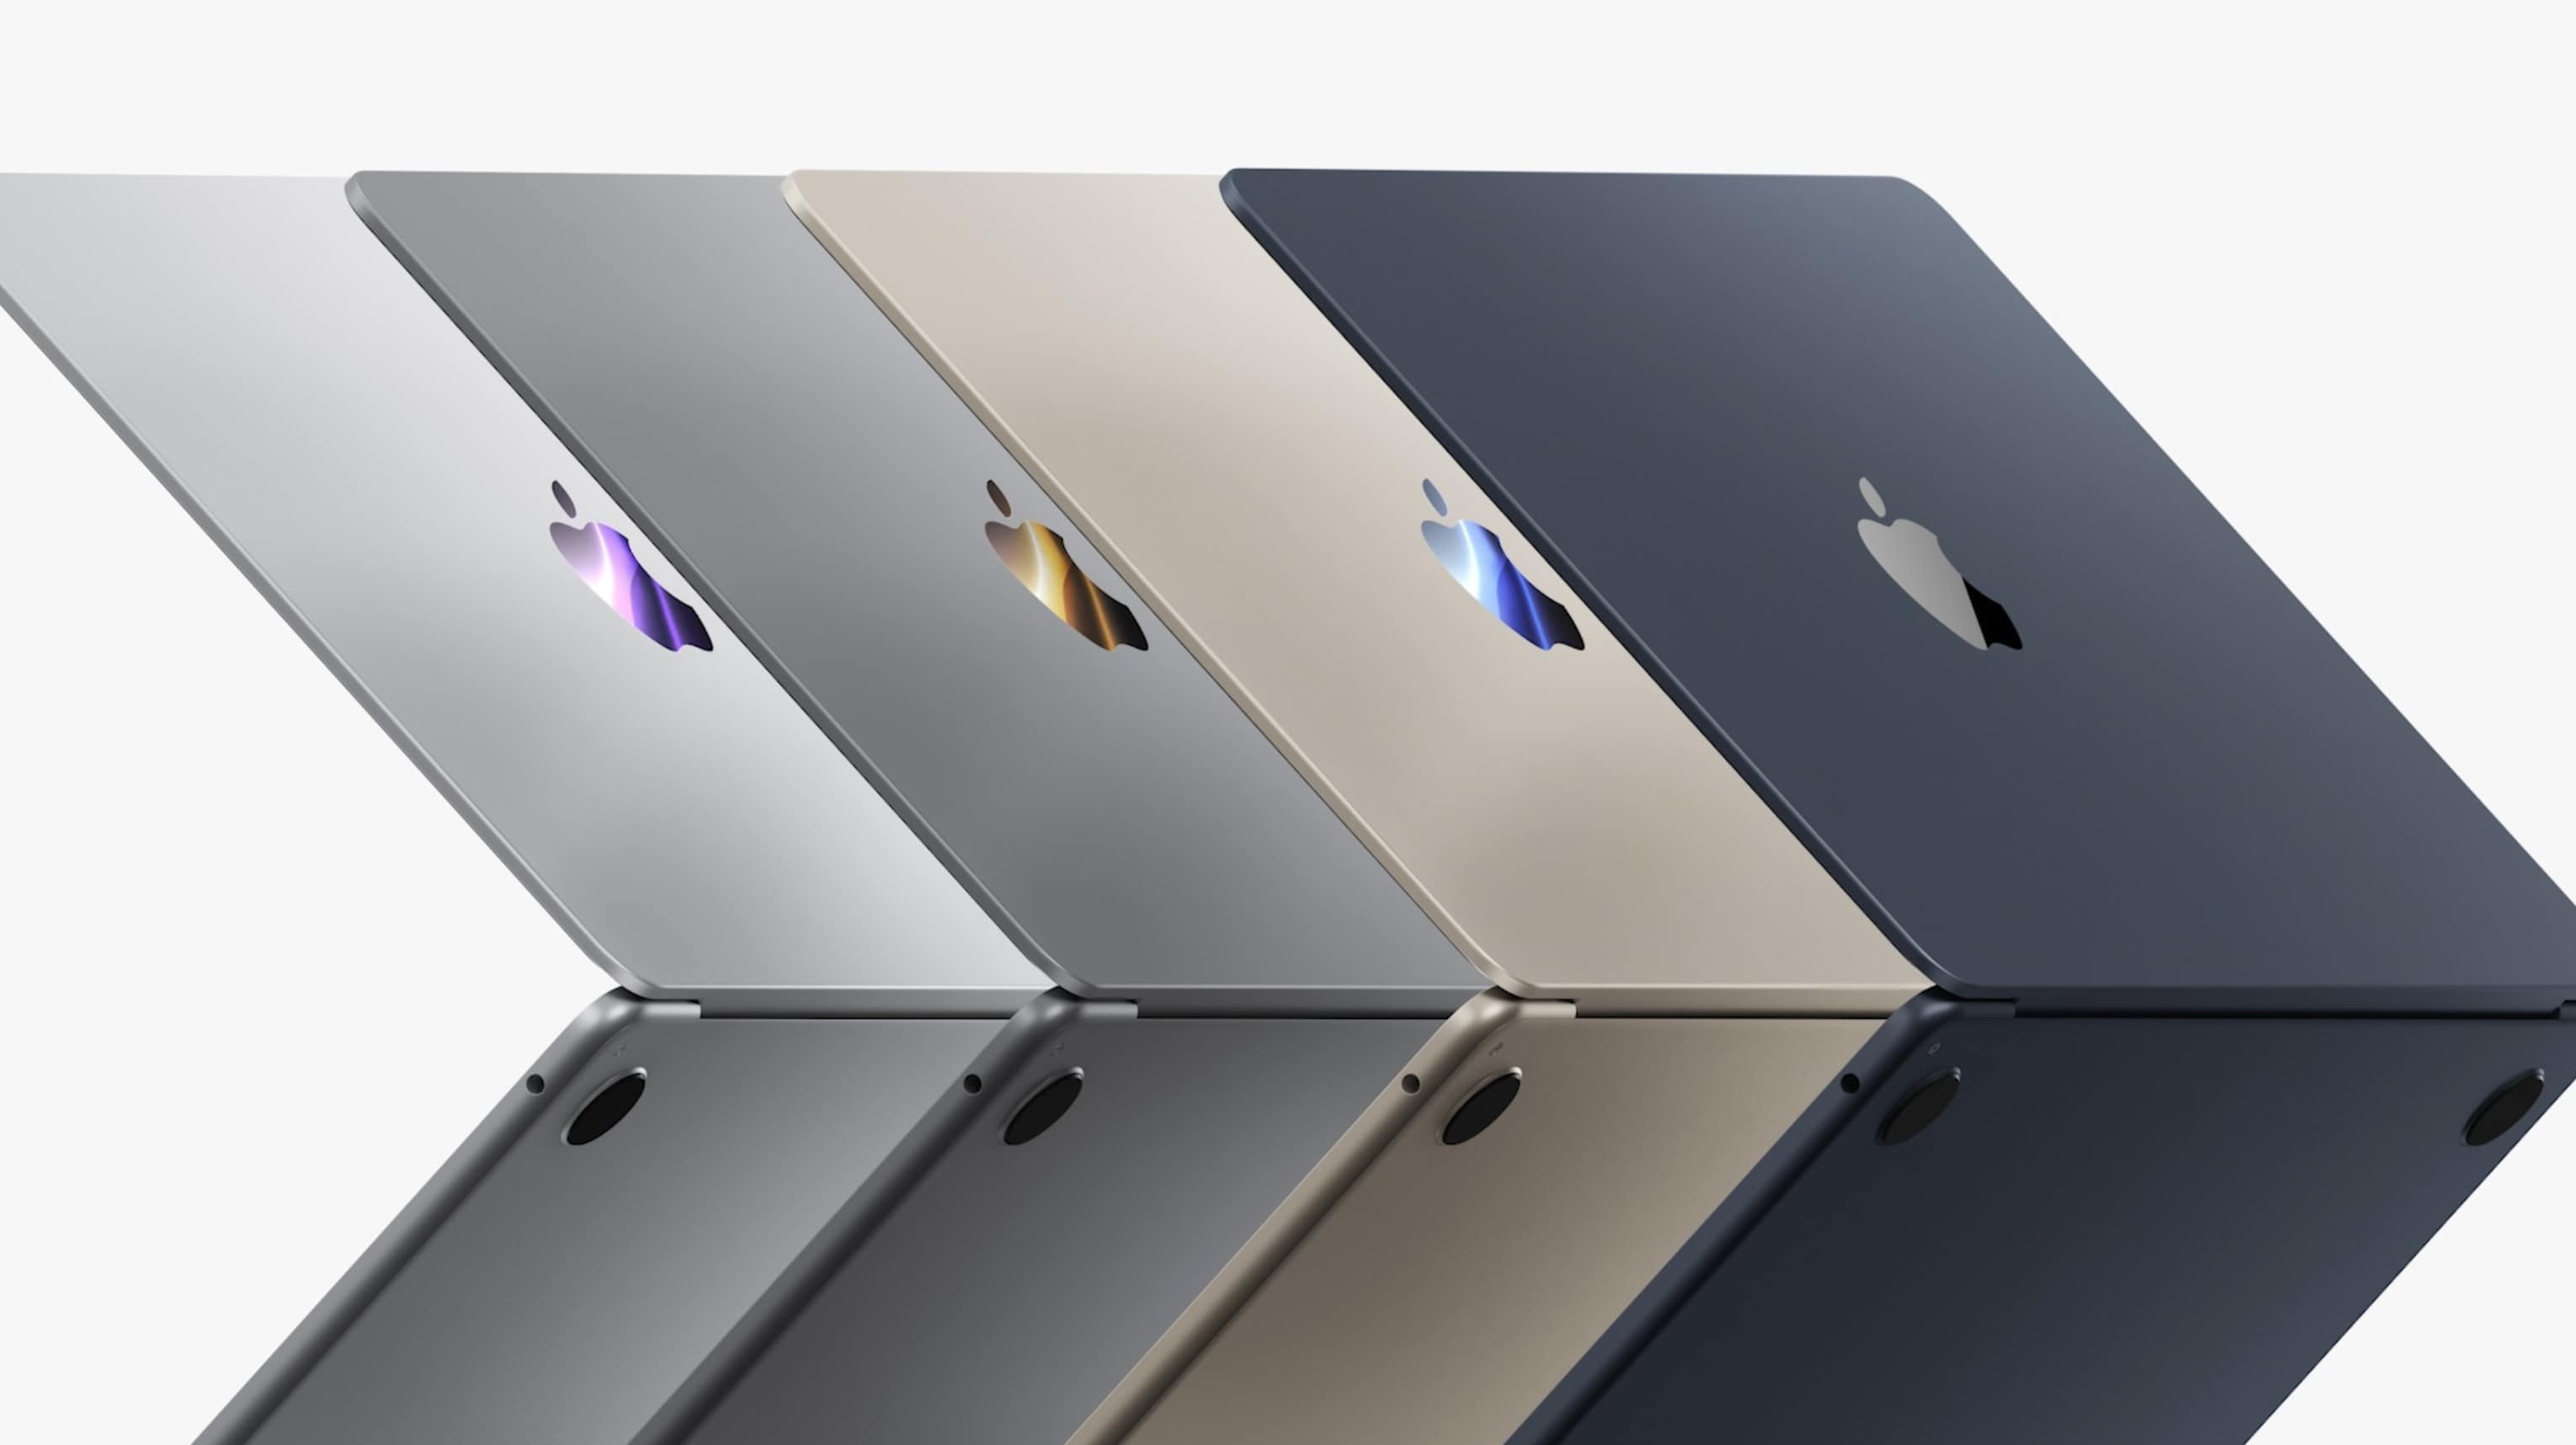 M3 MacBook Air may arrive in 2023 in two display screen sizes